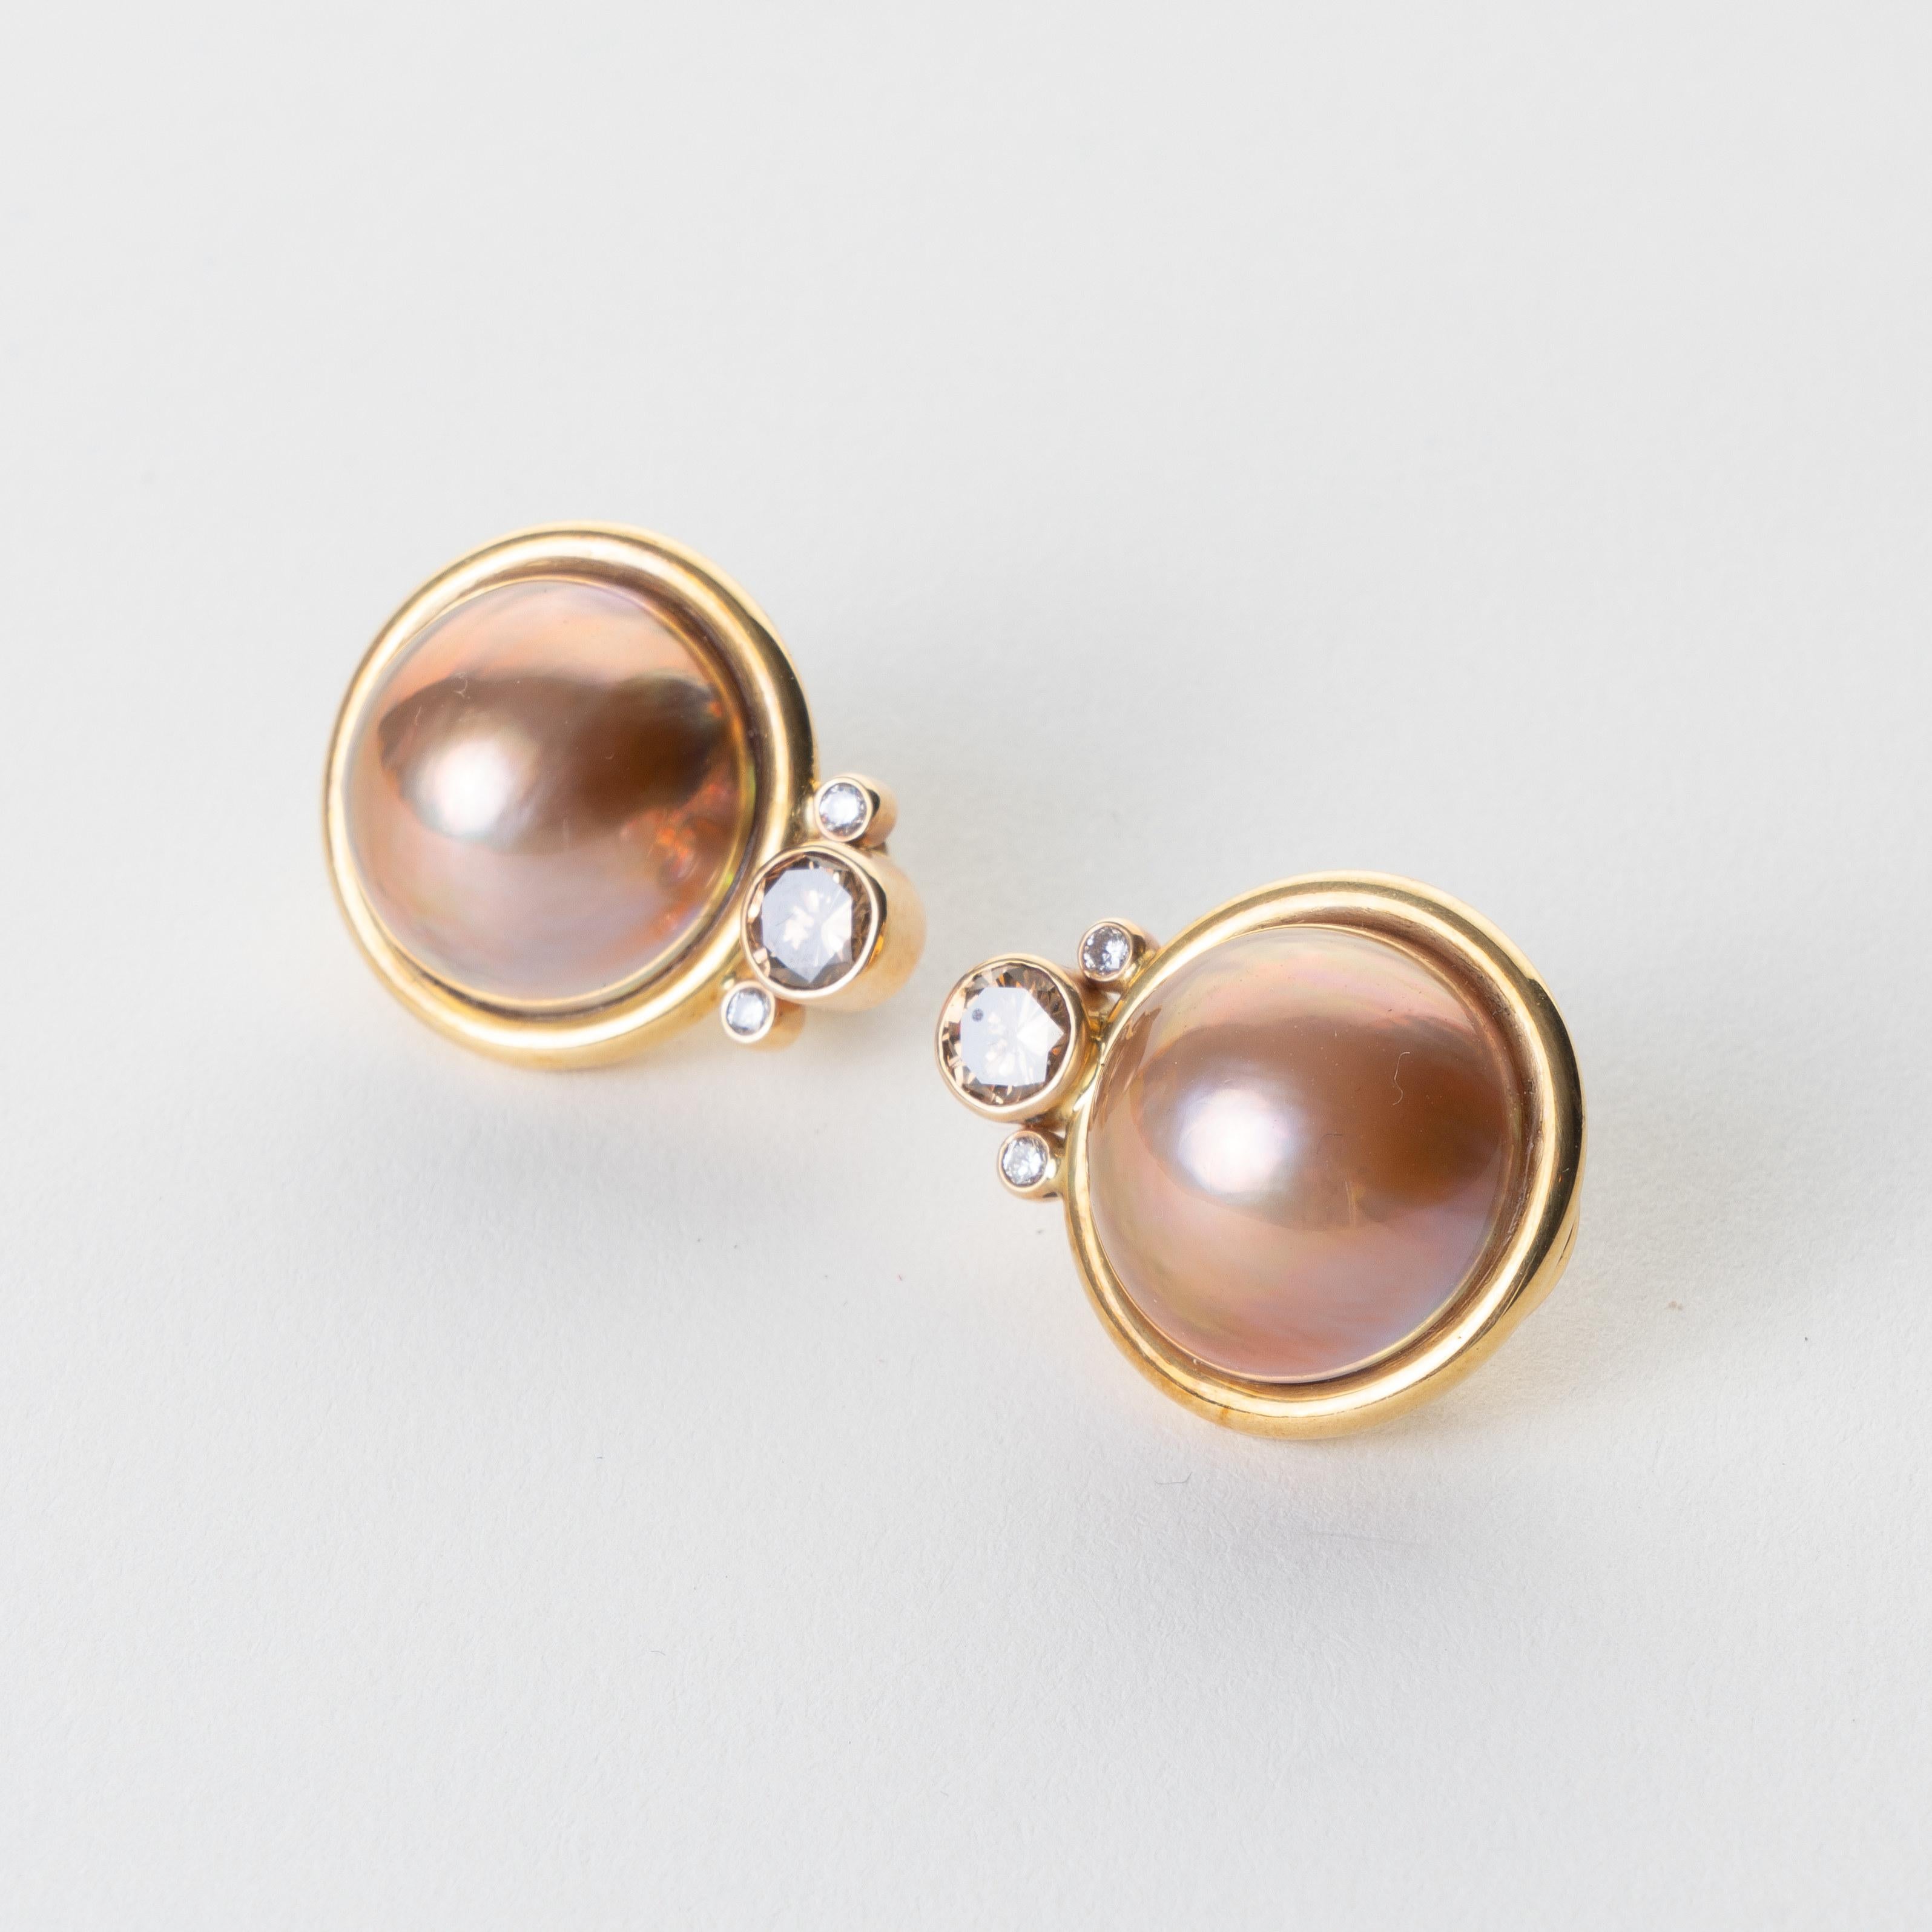 Italian cameo pendant & pearl earrings set For Sale 4